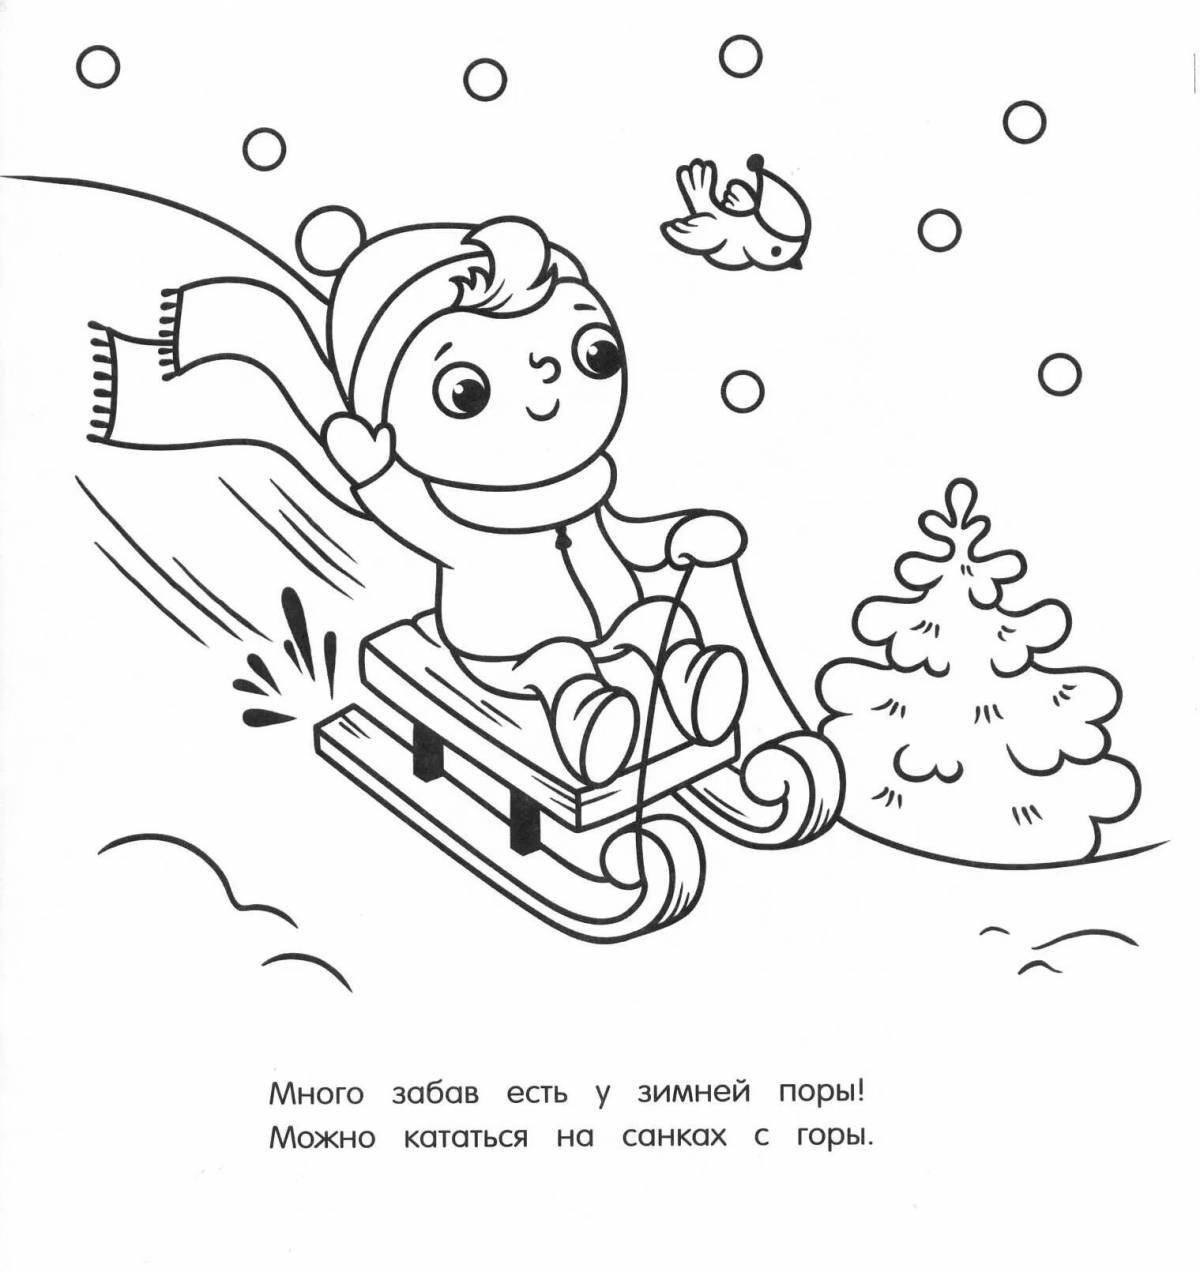 Coloring page joyful sledding